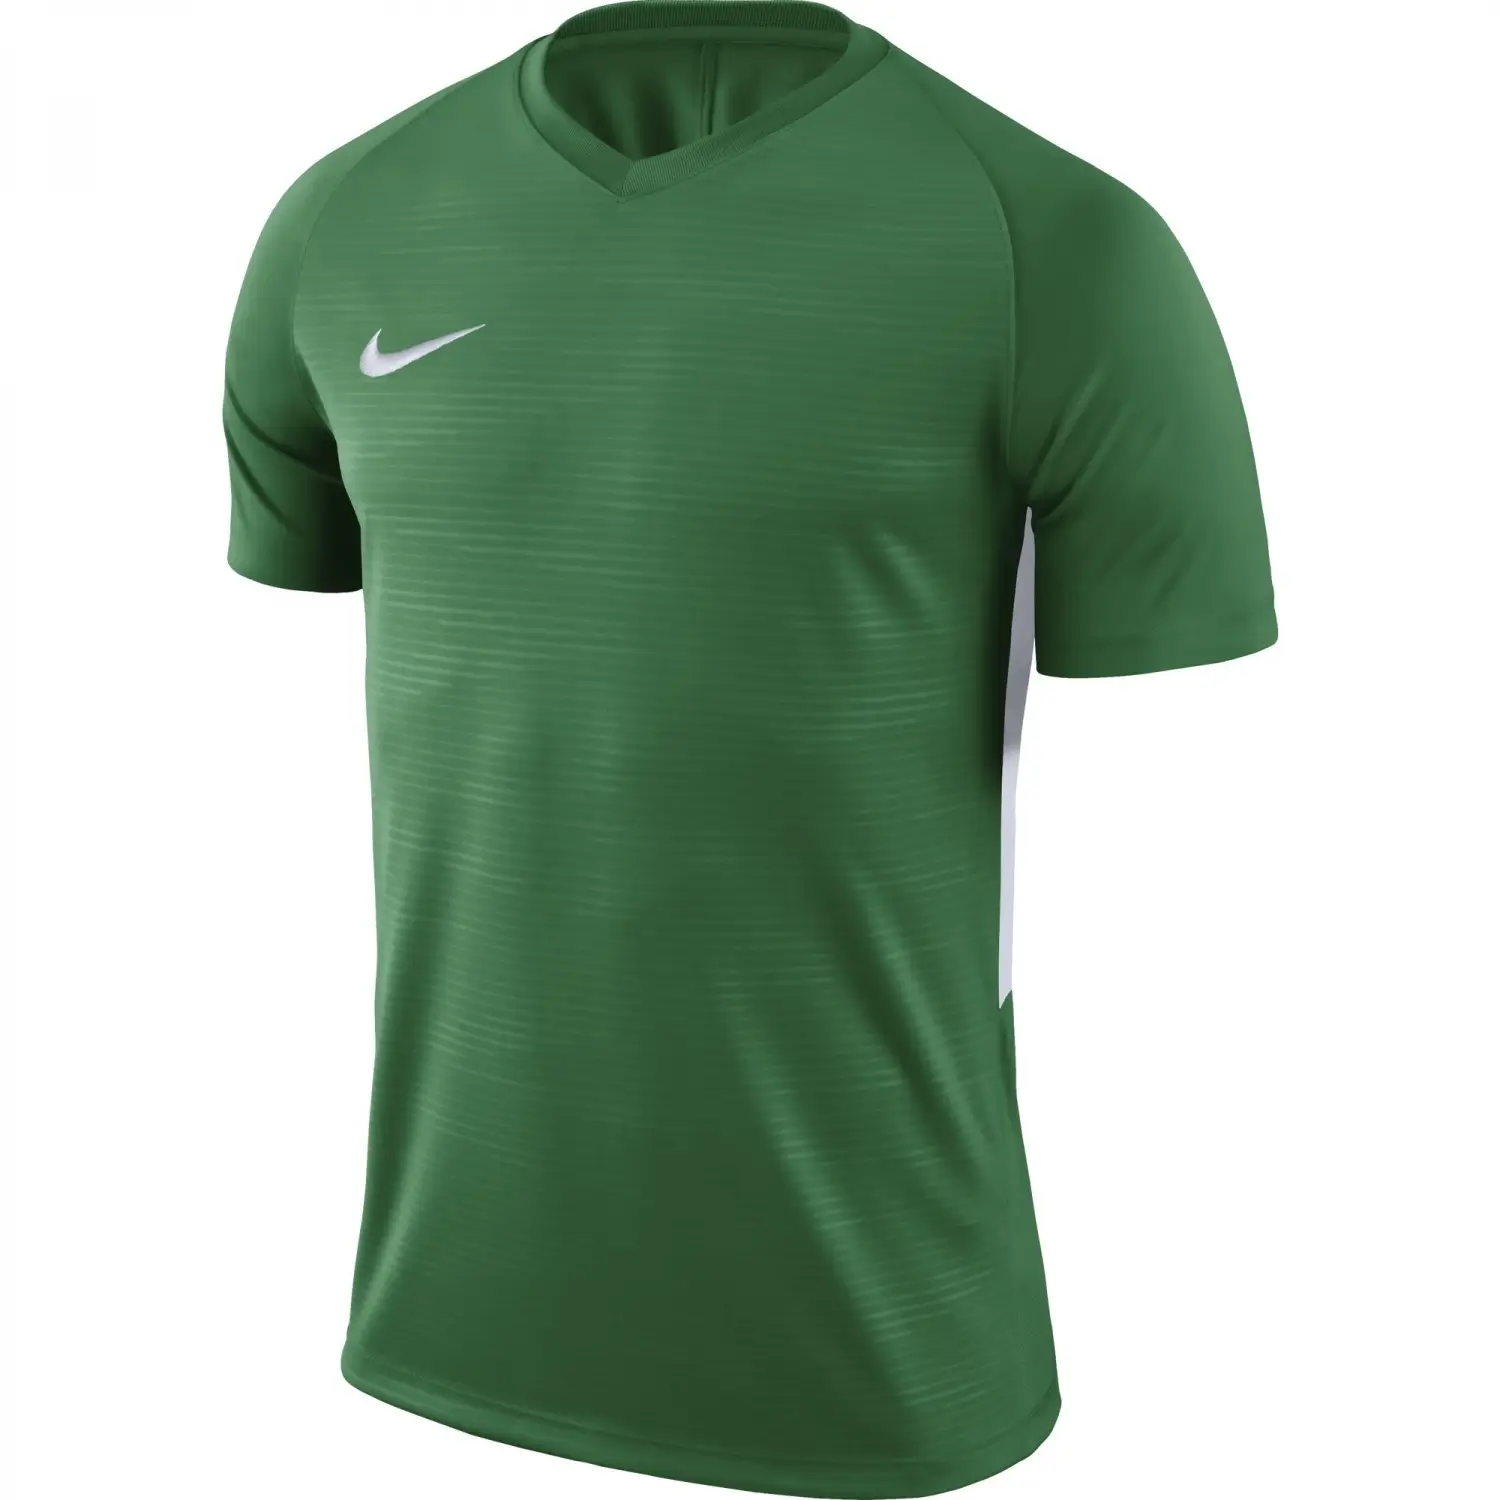 Nike Tiempo Premier Jersey Yeşil Çocuk Forma - 894111-302